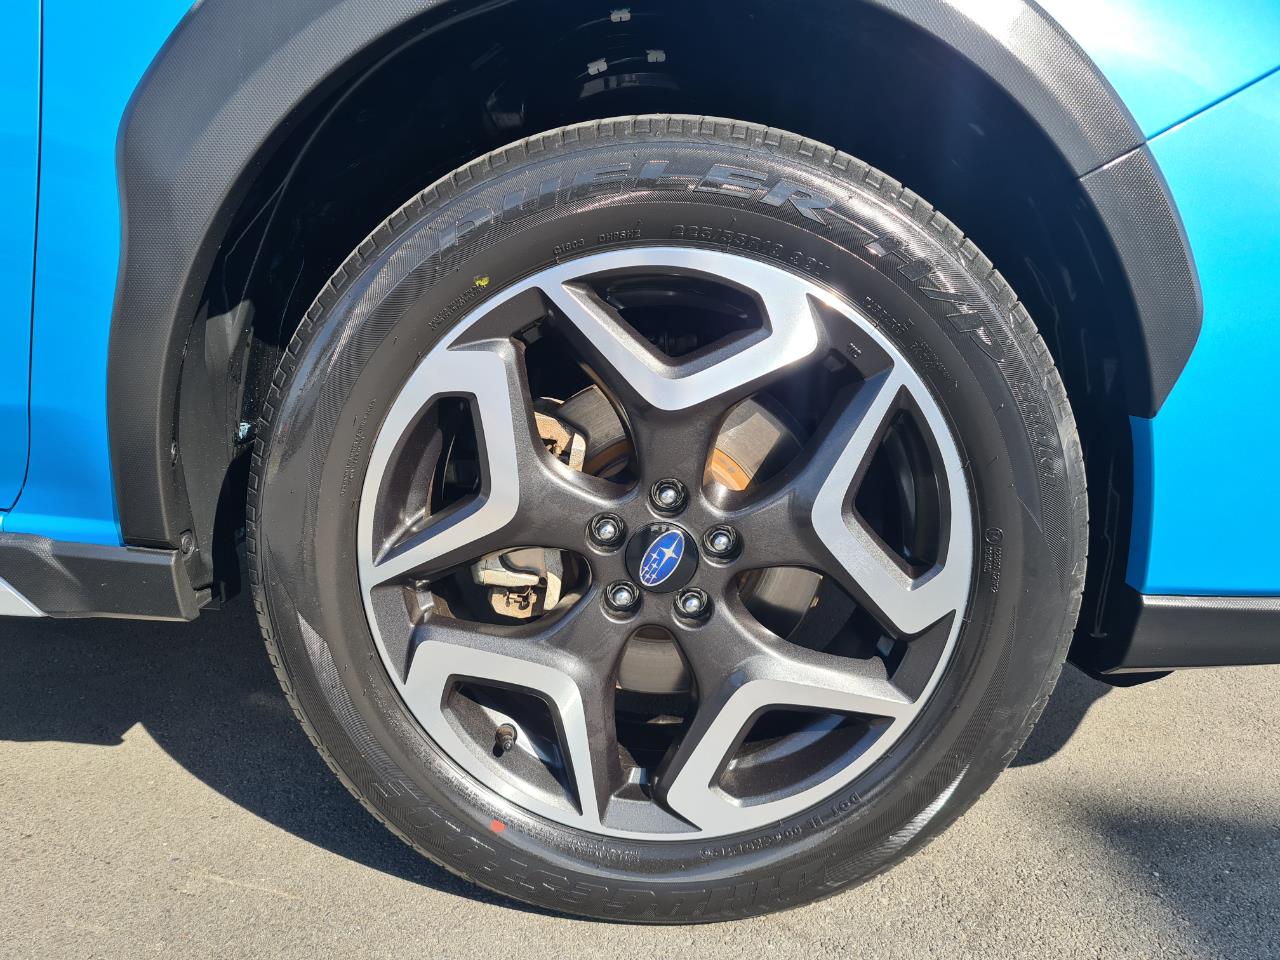 2019 Subaru Impreza